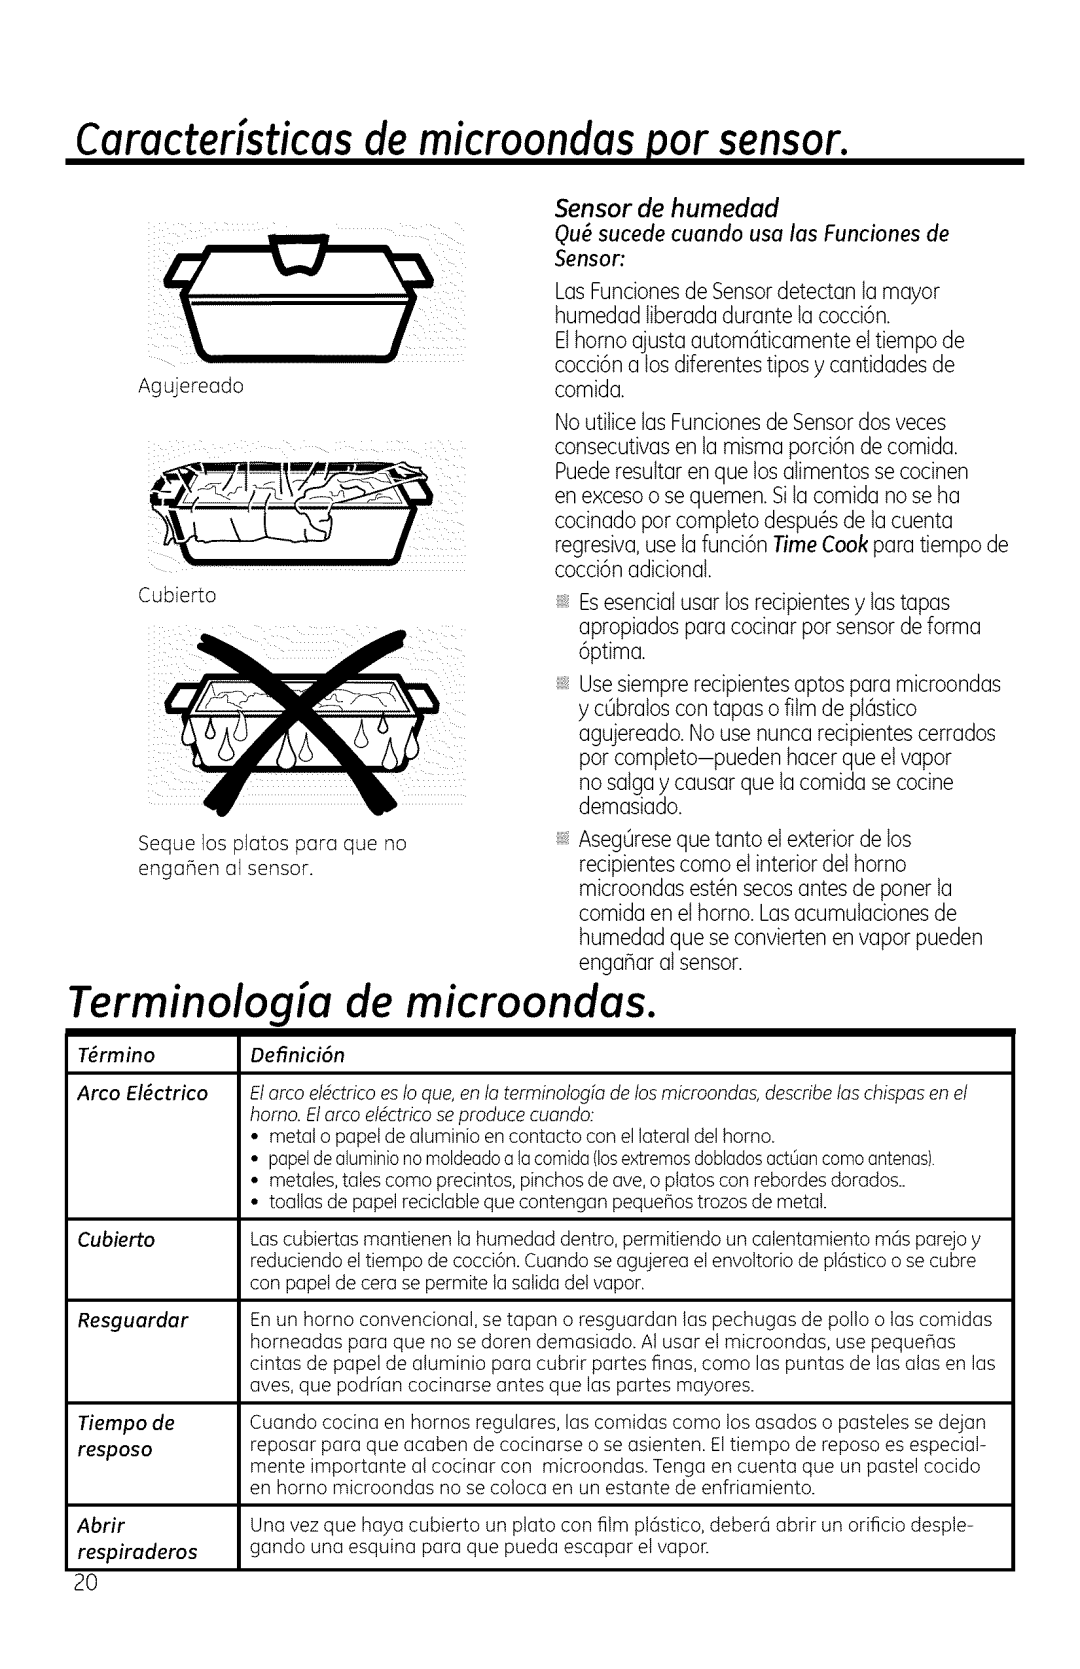 GE DVM1950, JVM1950, JNM1951 manual Caracteristicas de microondas por sensor, Terminologia 